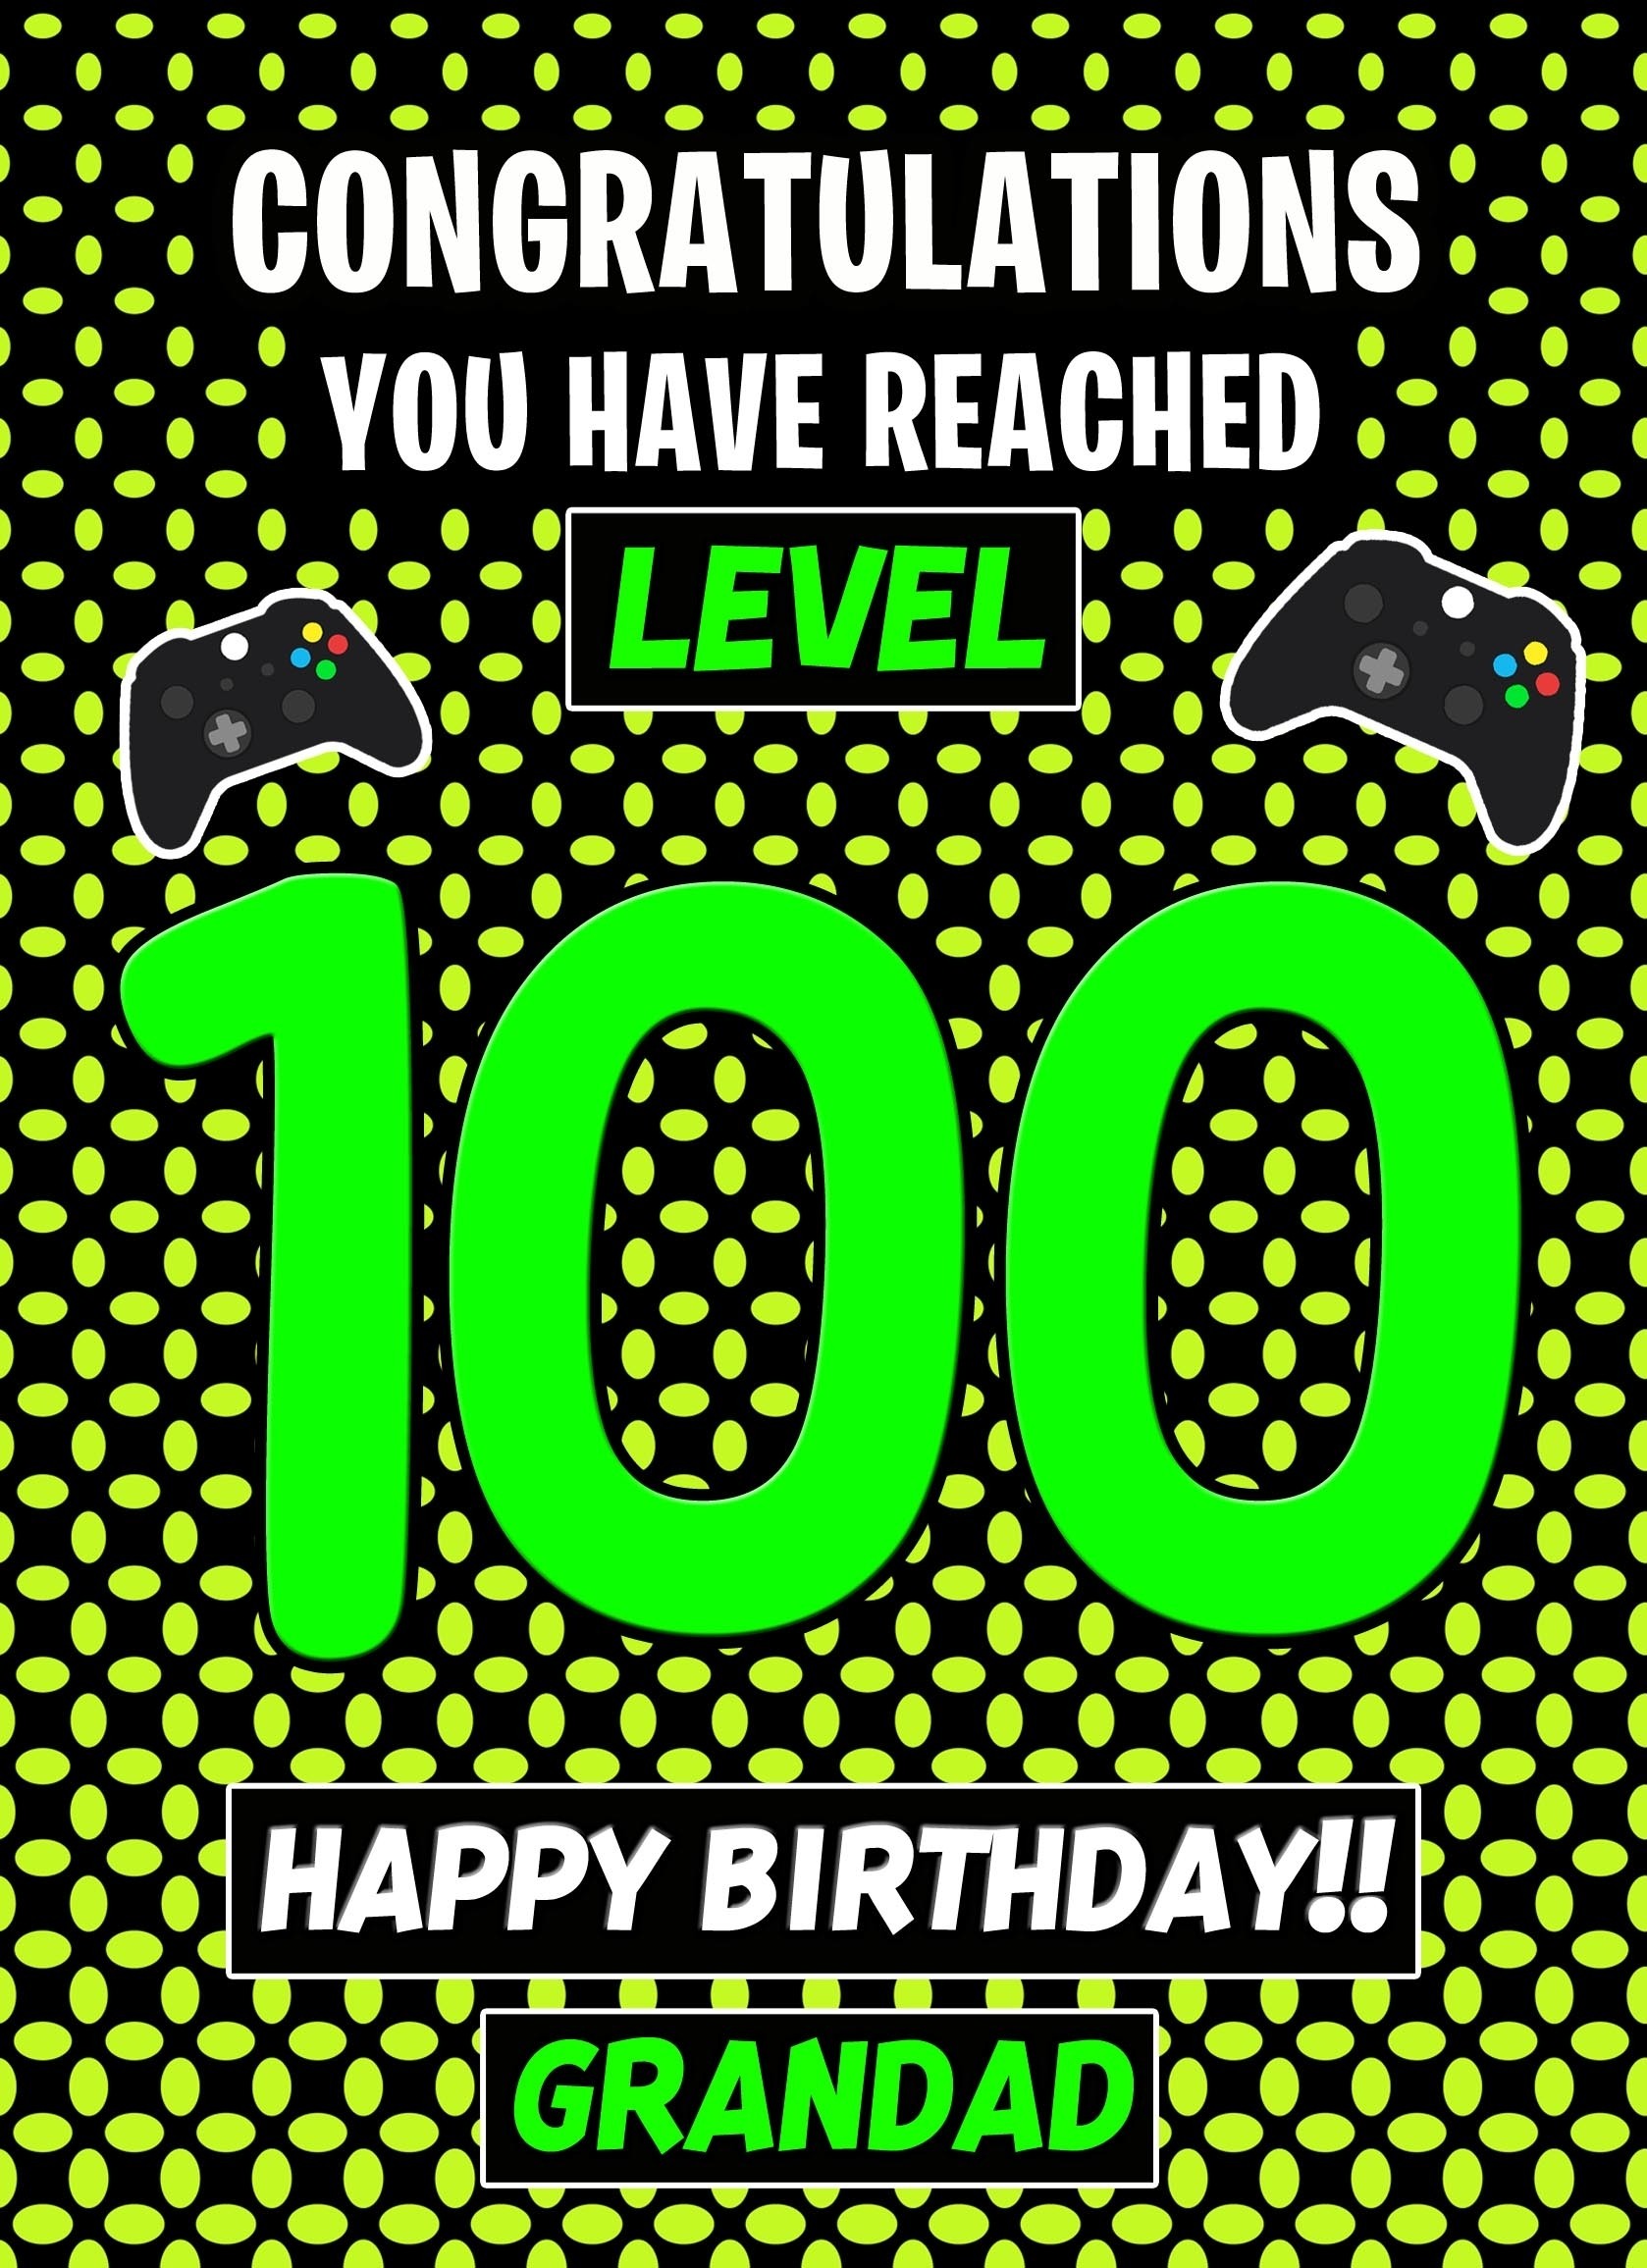 Grandad 100th Birthday Card (Level Up Gamer)